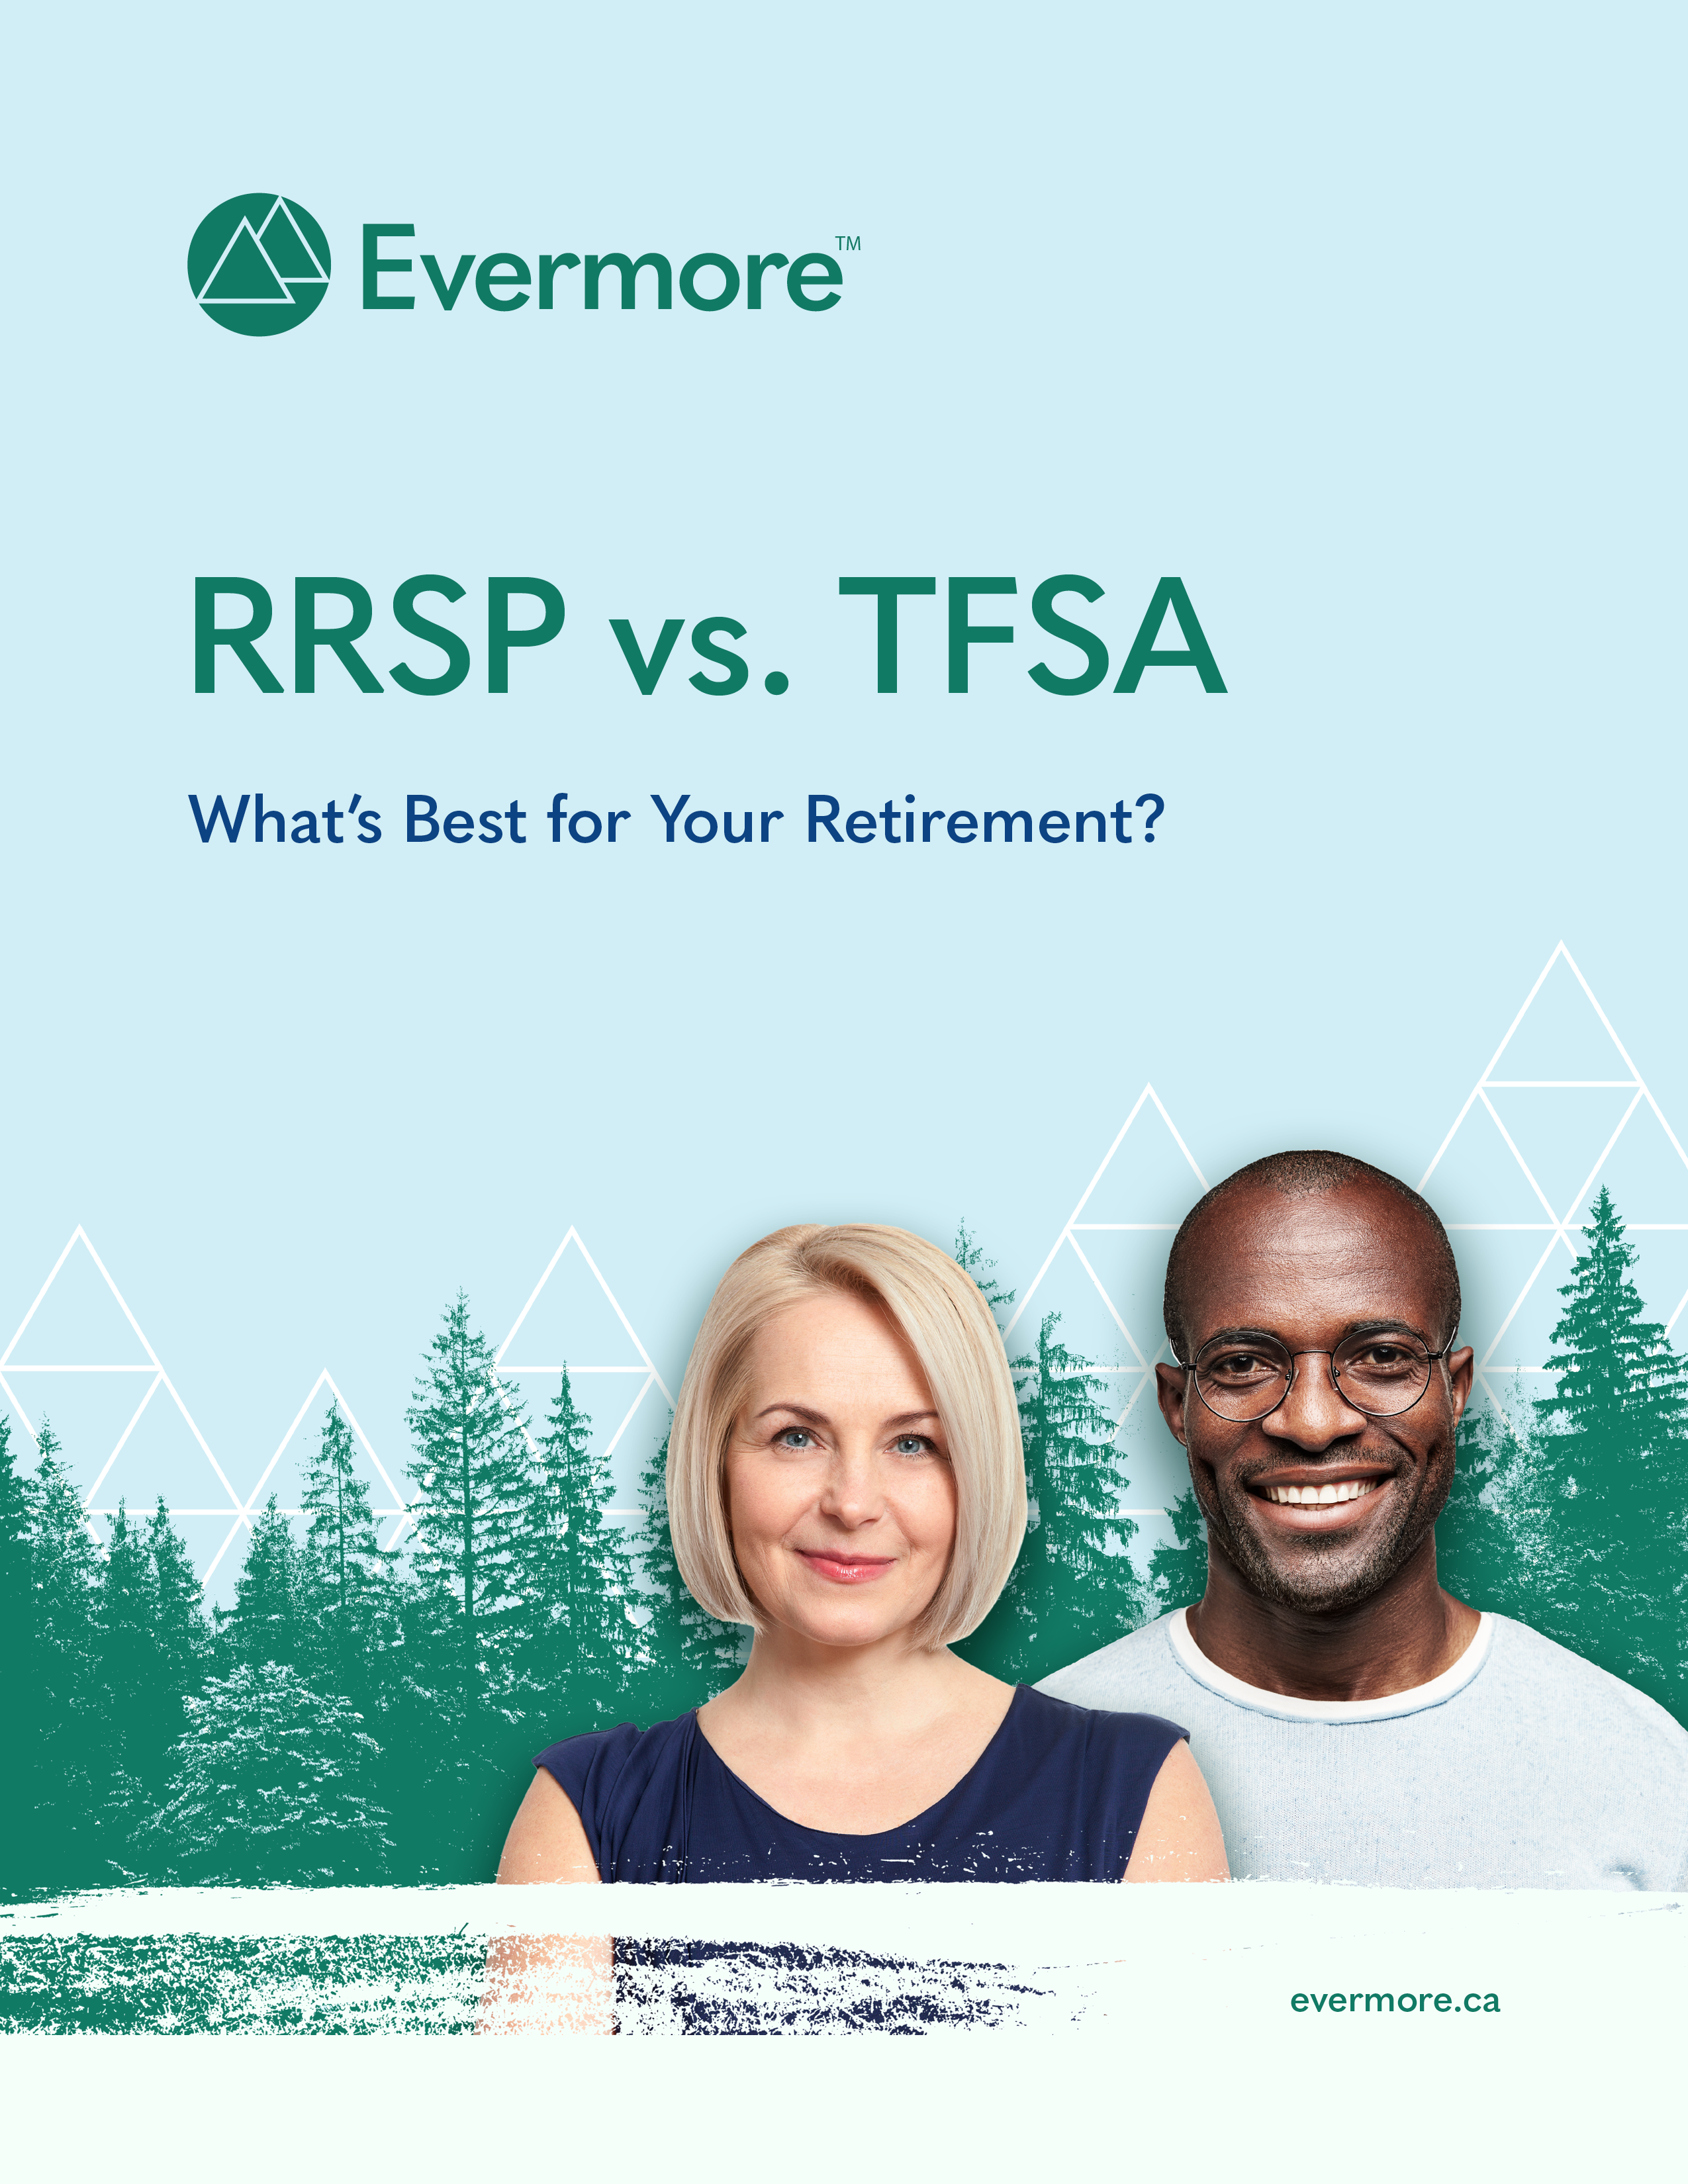 RRSP vs TSFA Cover Image